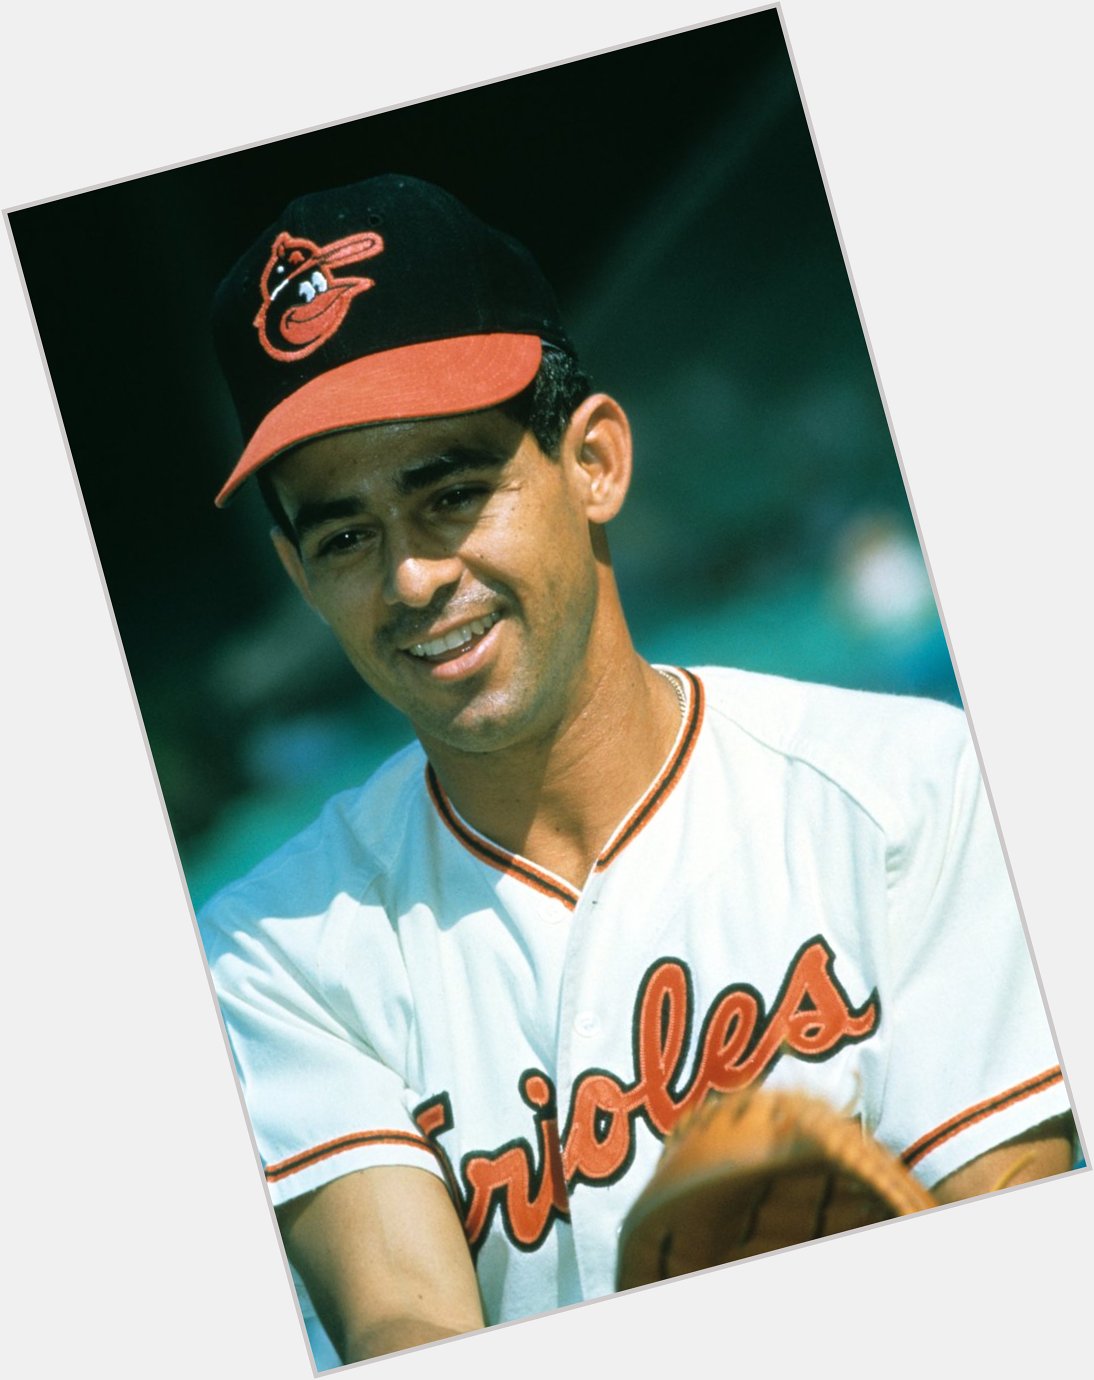 Happy Birthday to former shortstop and Hall of Famer, Luis Aparicio! 